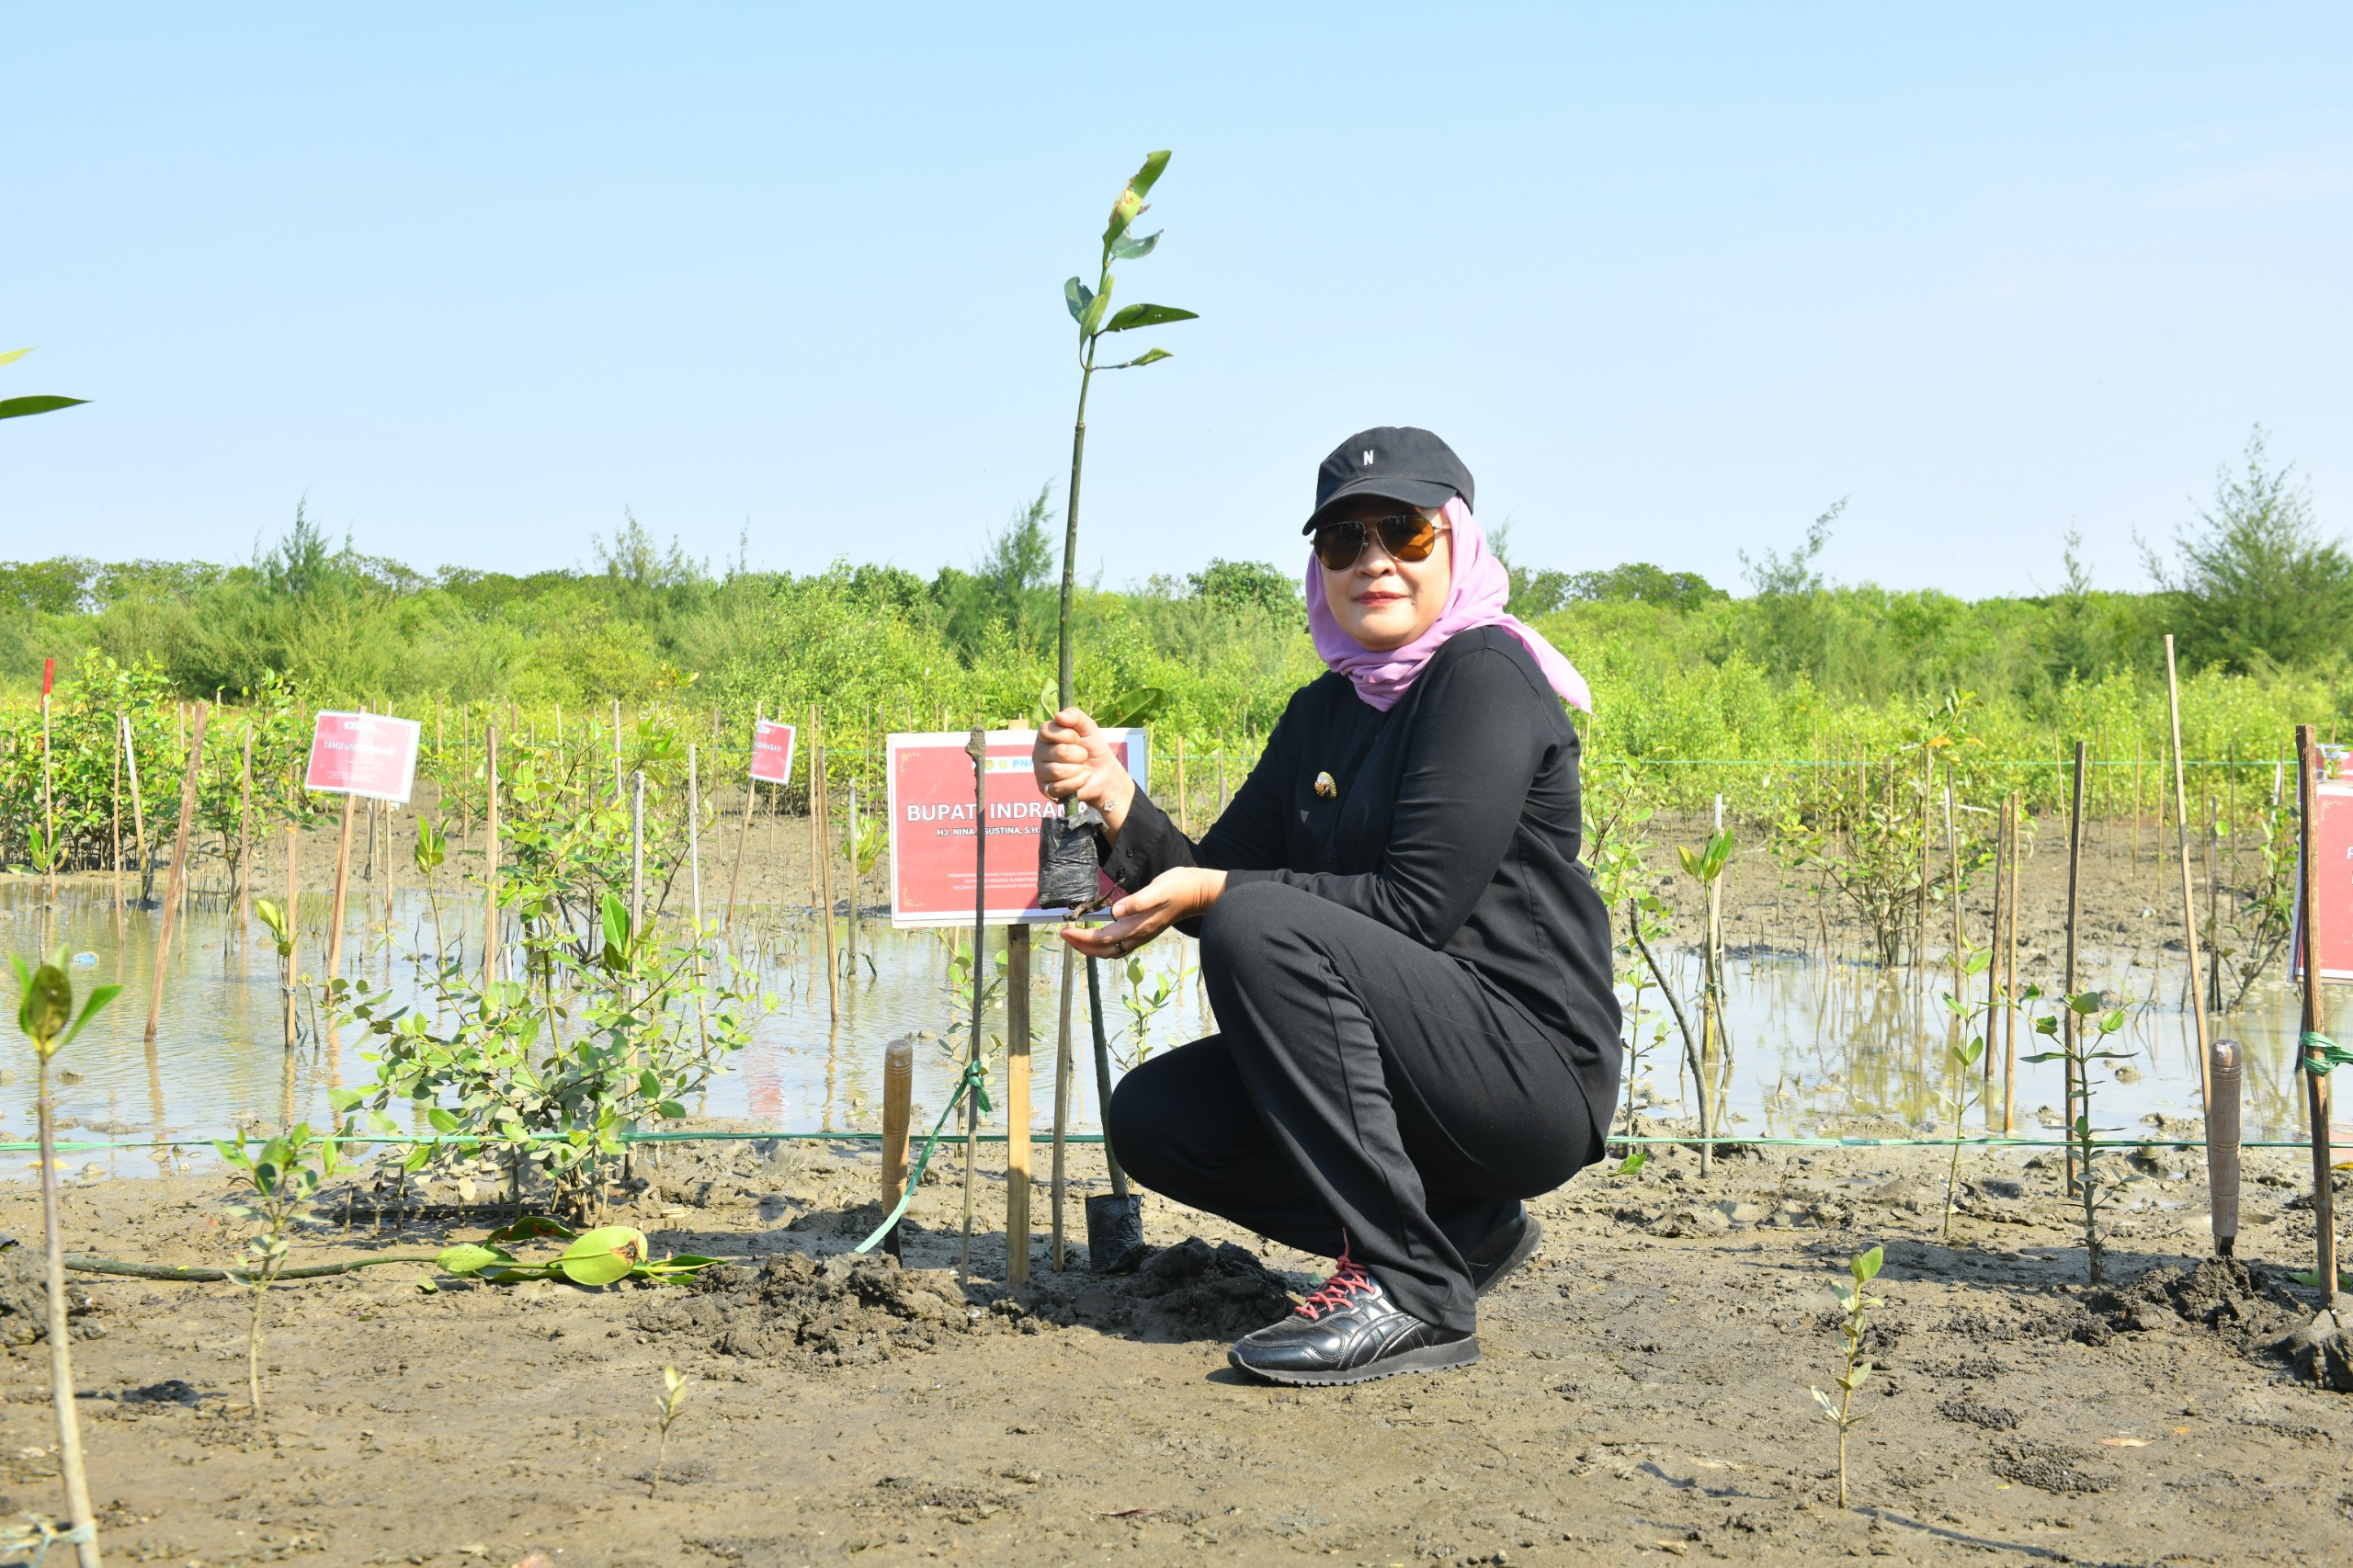 Tumbuhkan Harapan, Bupati Nina Agustina Tanam Mangrove sebagai Langkah Strategis dalam Pelestarian Lingkungan